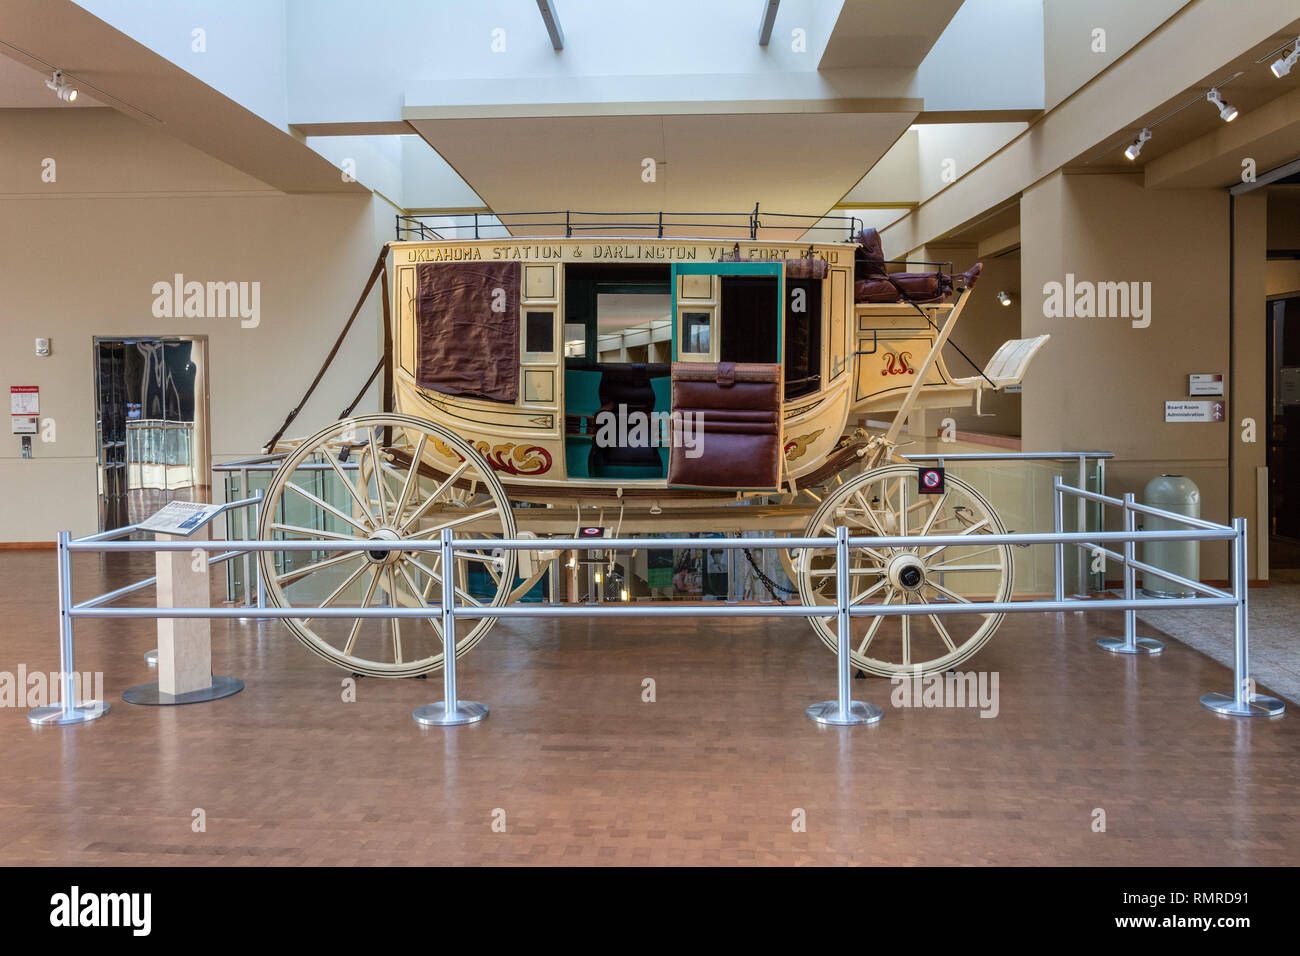 Oklahoma City, Oklahoma, United States of America - January 18, 2017. Historical stagecoach known as Concord Coach, on display at the Oklahoma History Stock Photo